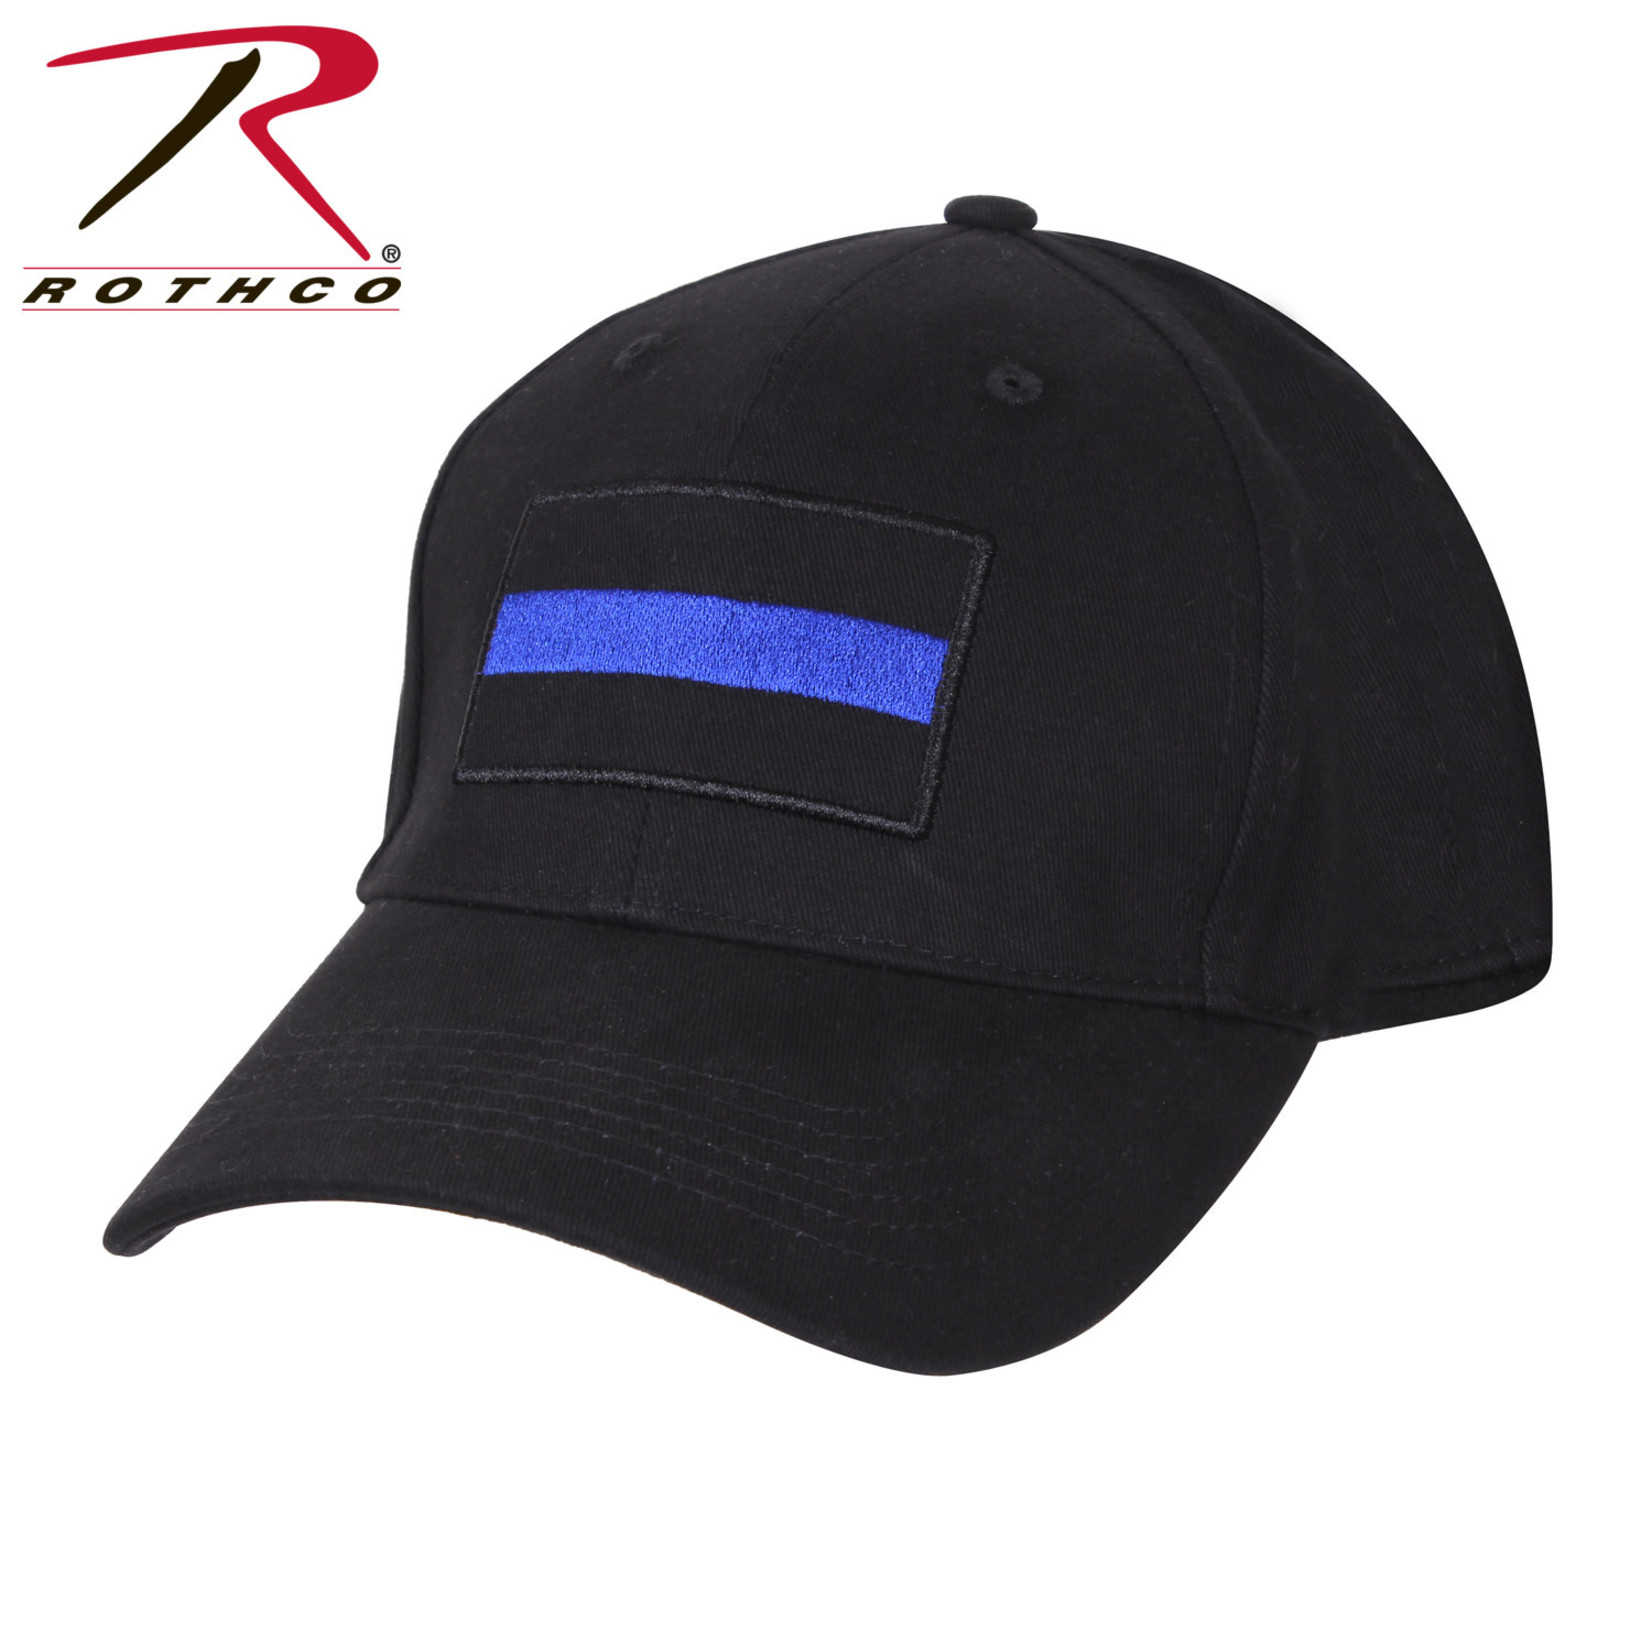 Rothco Rothco Thin Blue Line Bar Low Profile Cap